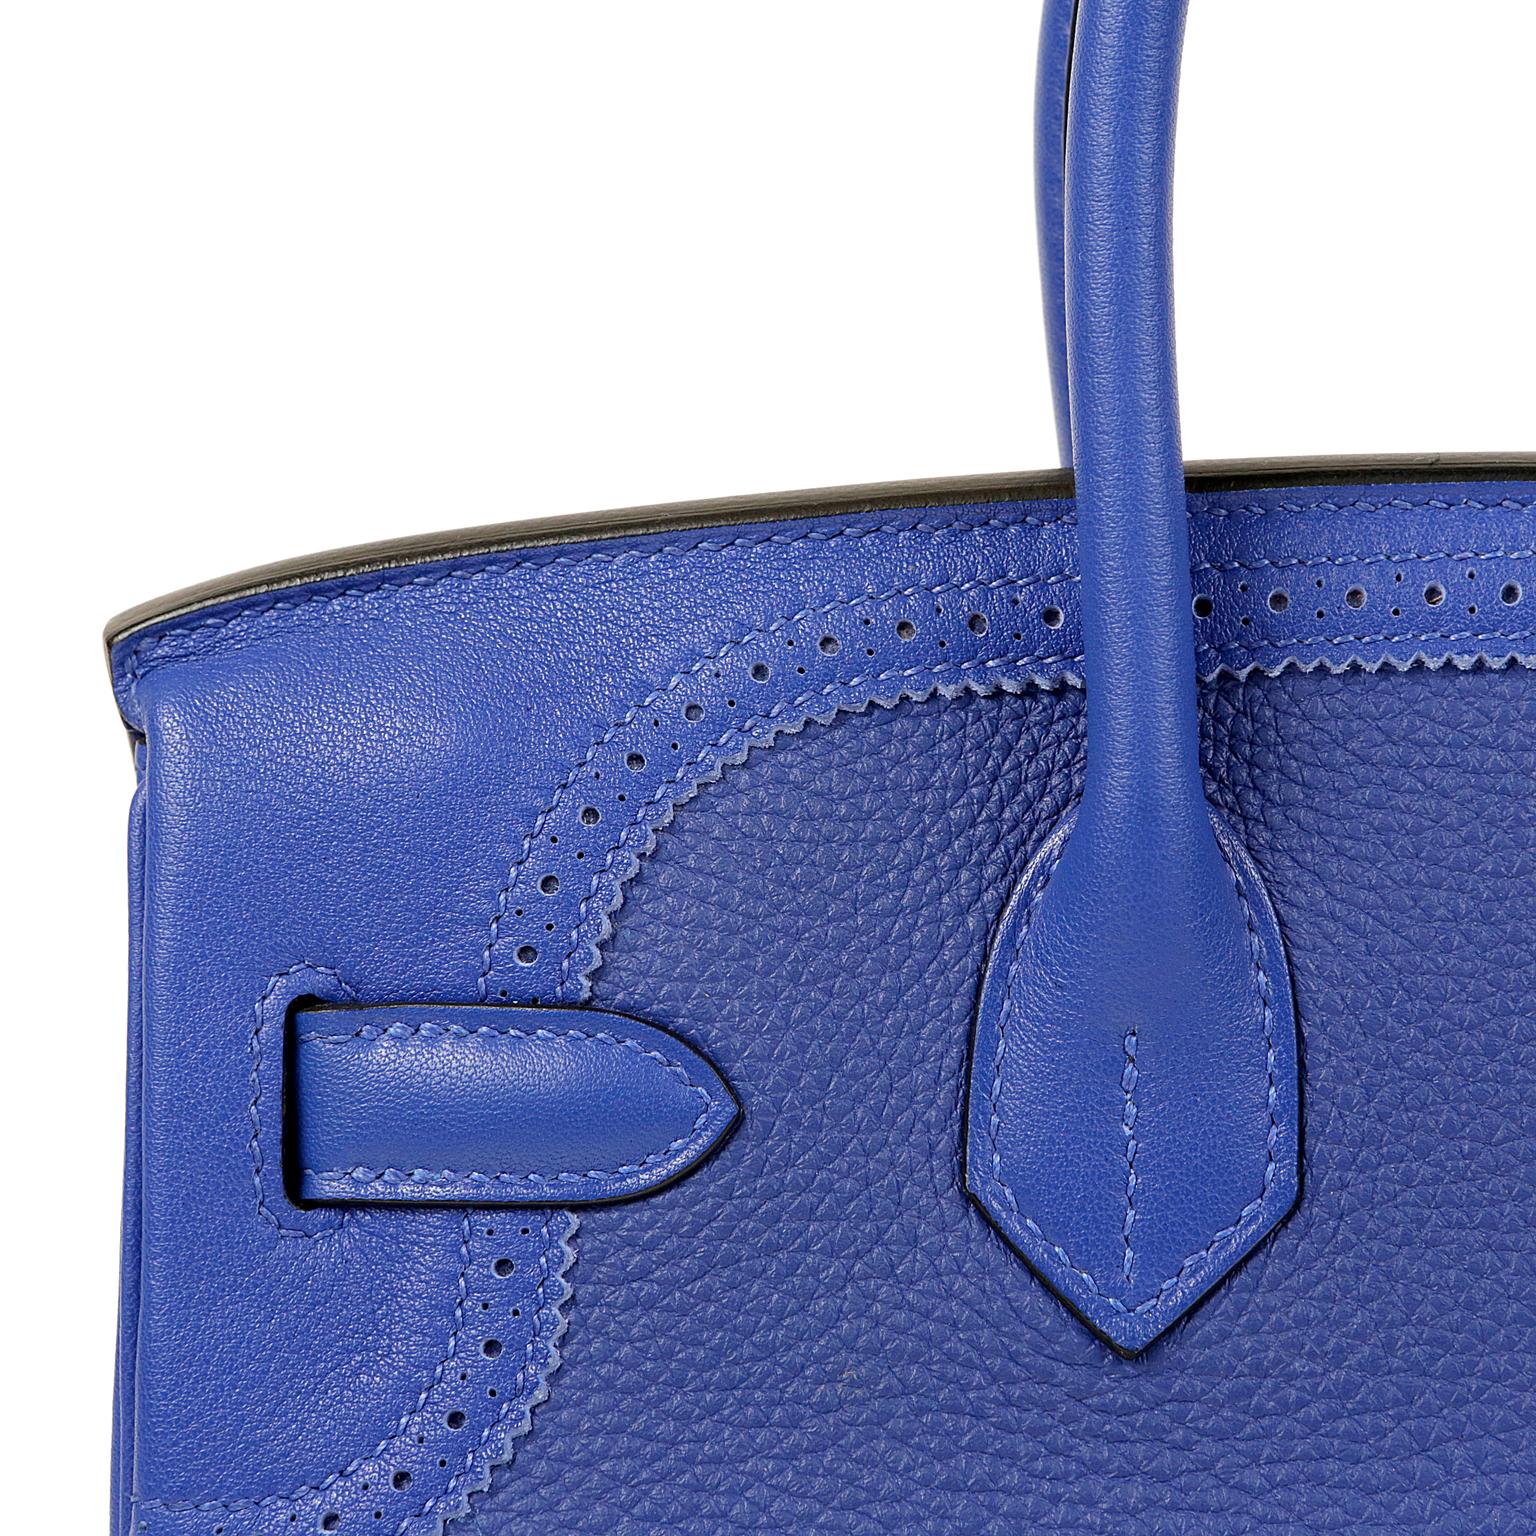 Hermès Blue Electrique Togo 30 cm Ghillies Birkin Bag 5